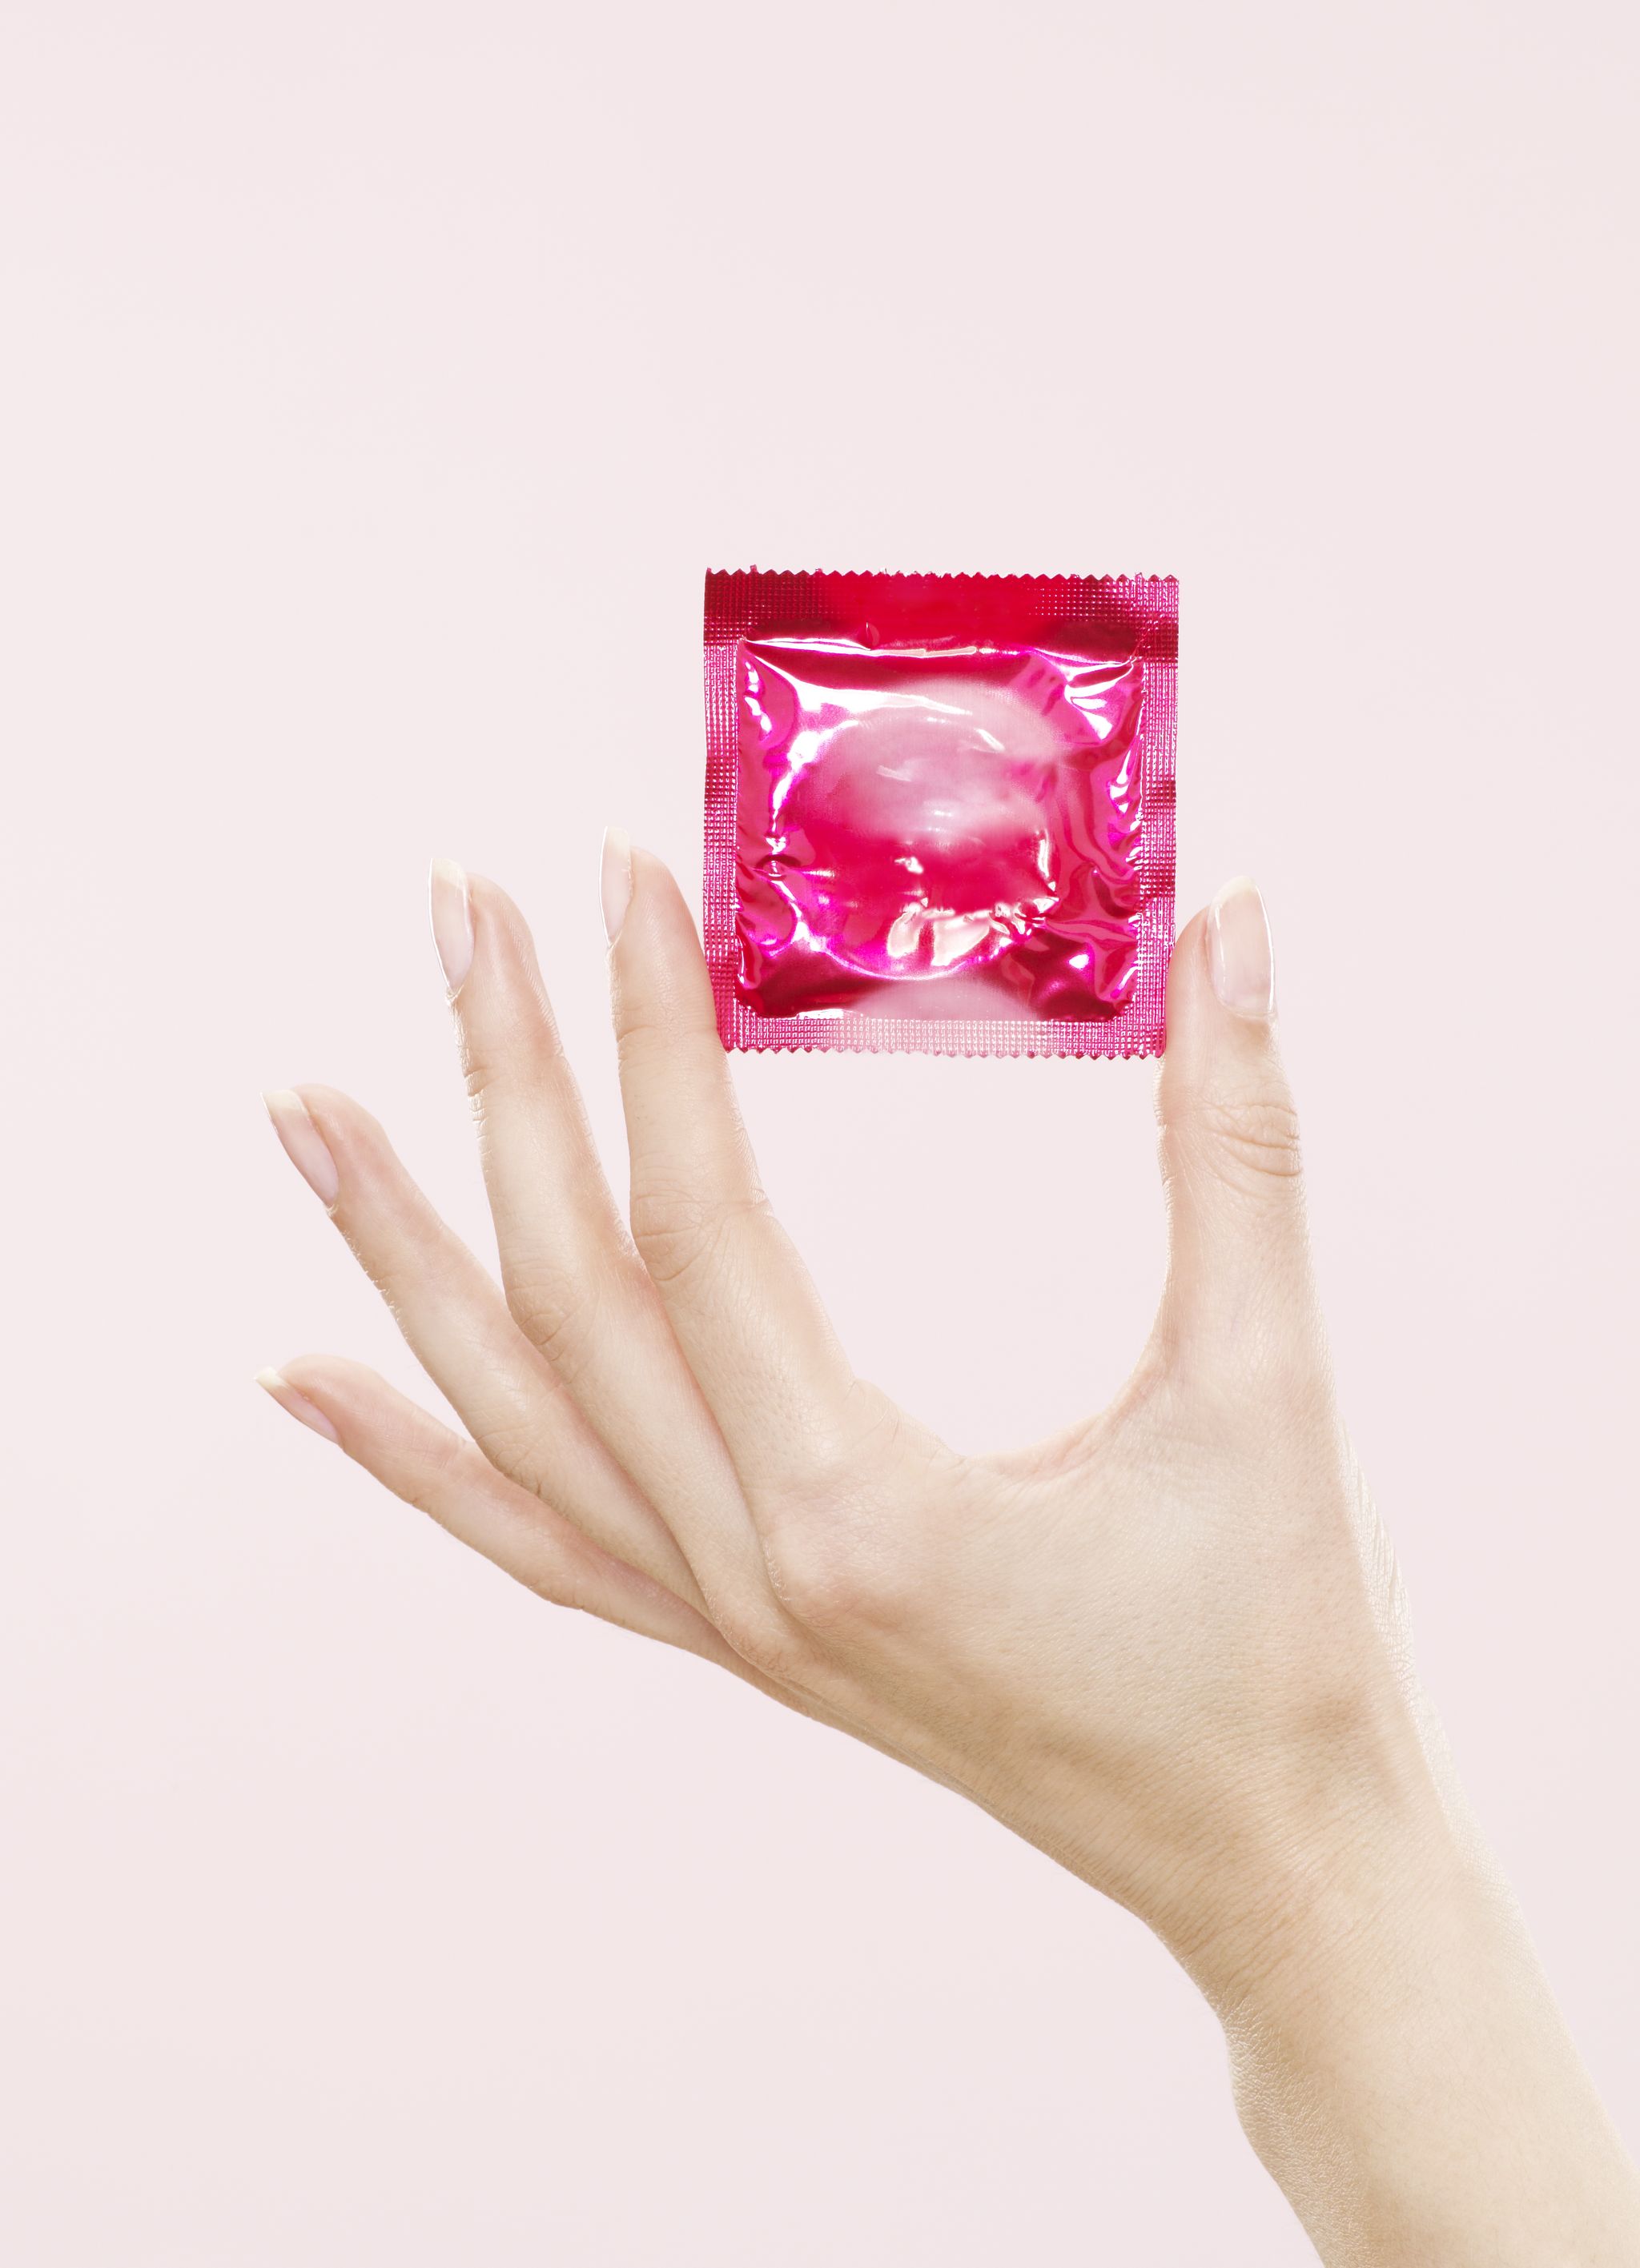 female hand holding sealed condom packet